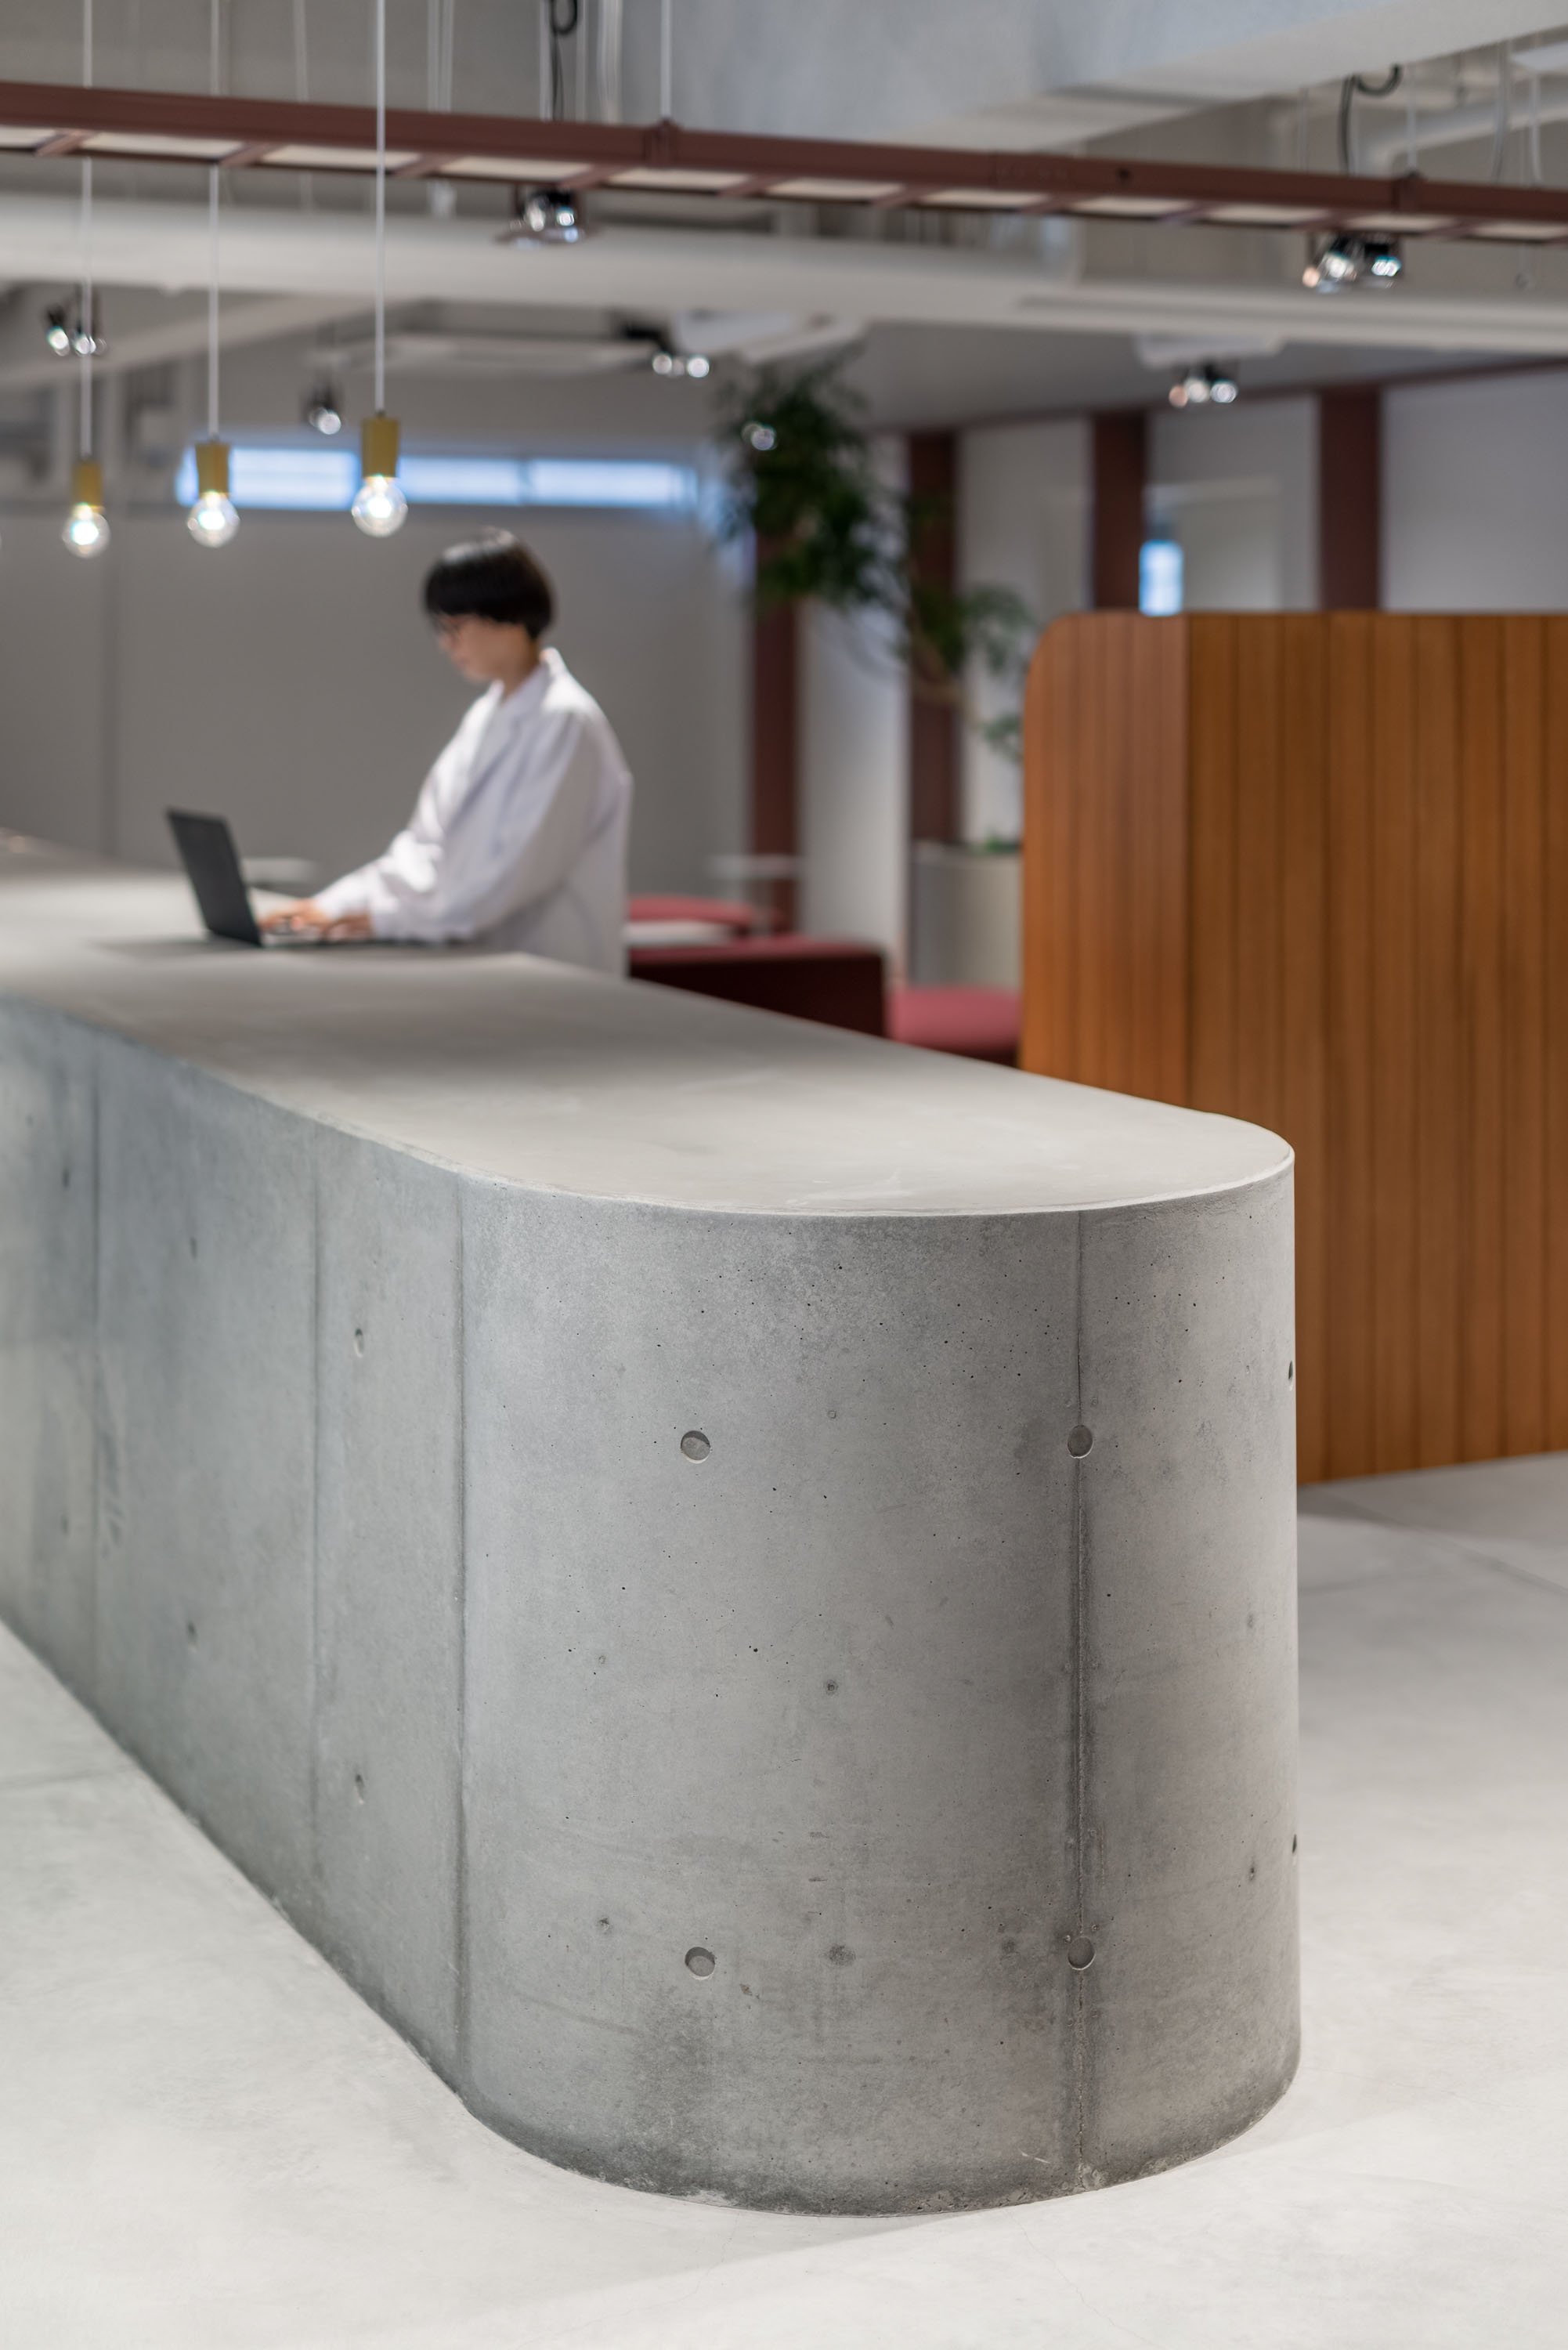  REIICHI IKEDA DESIGNの池田励一がインテリアデザインを手掛けた日本新薬のオフィス「KOKU」。コンクリート打ち放しのカウンターのディテール 